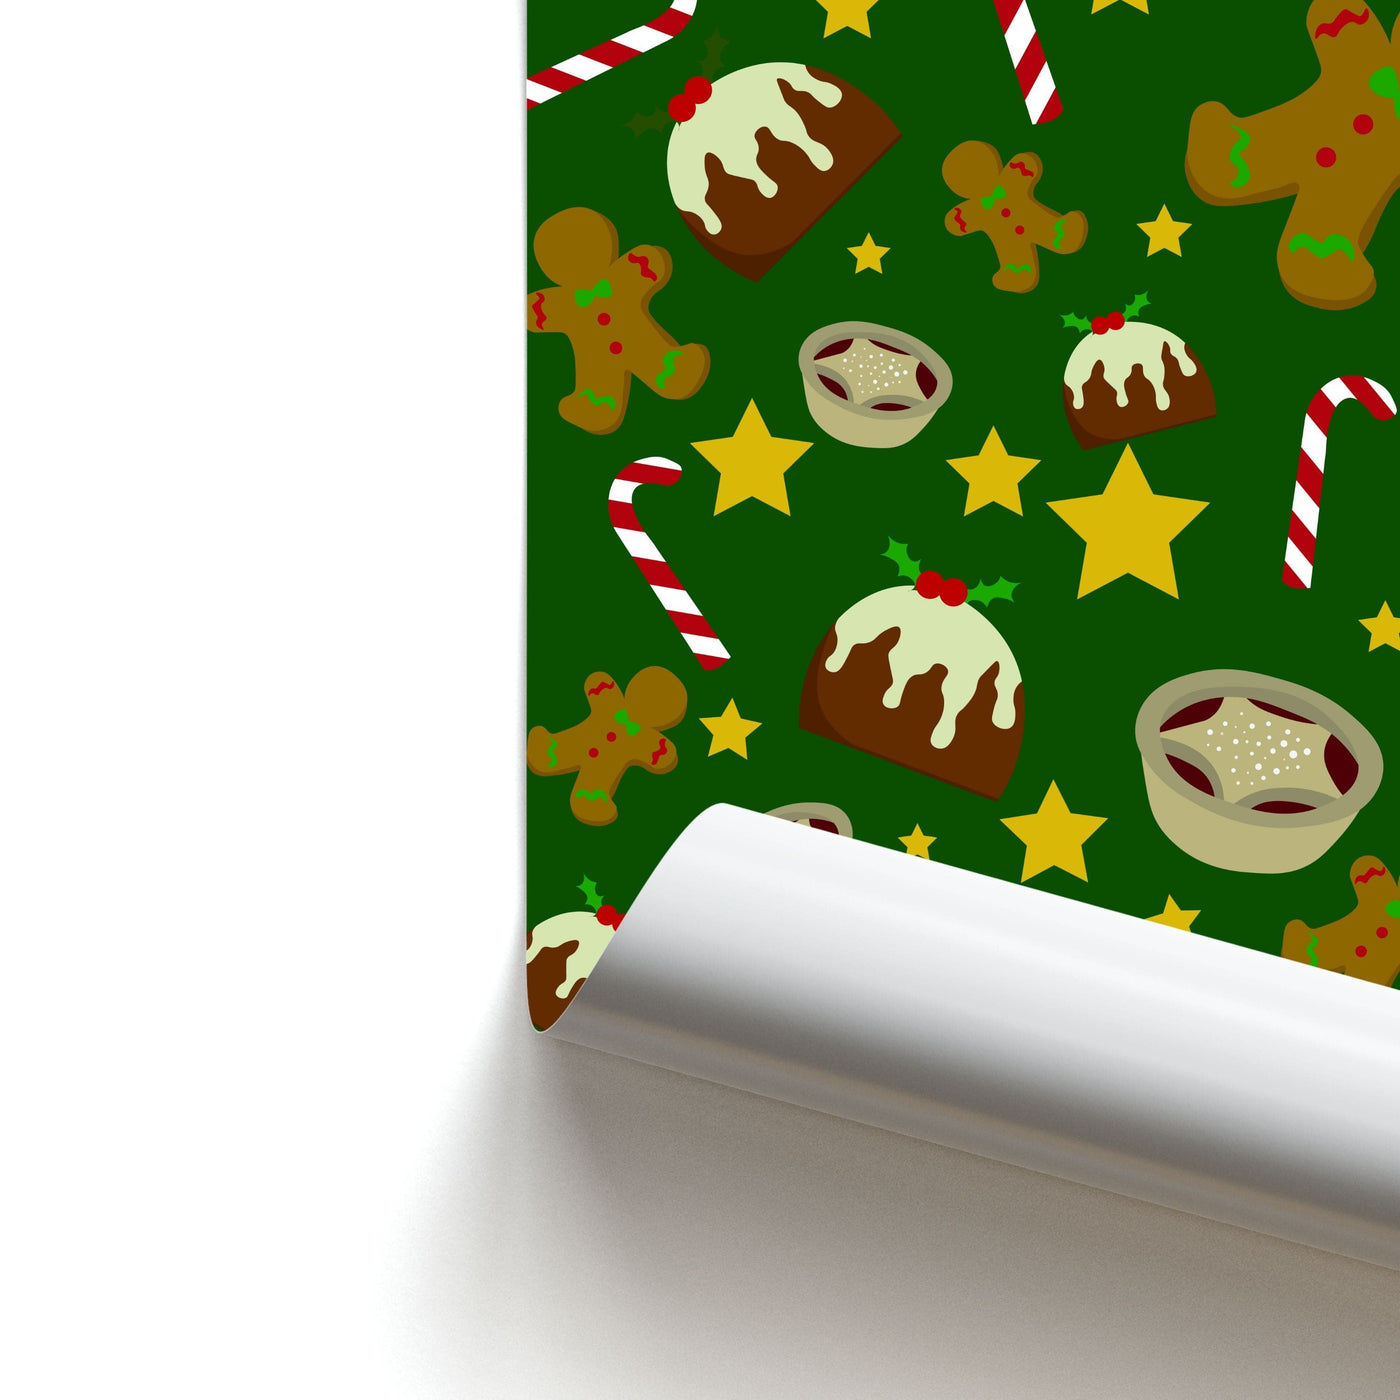 Festive - Christmas Patterns Poster